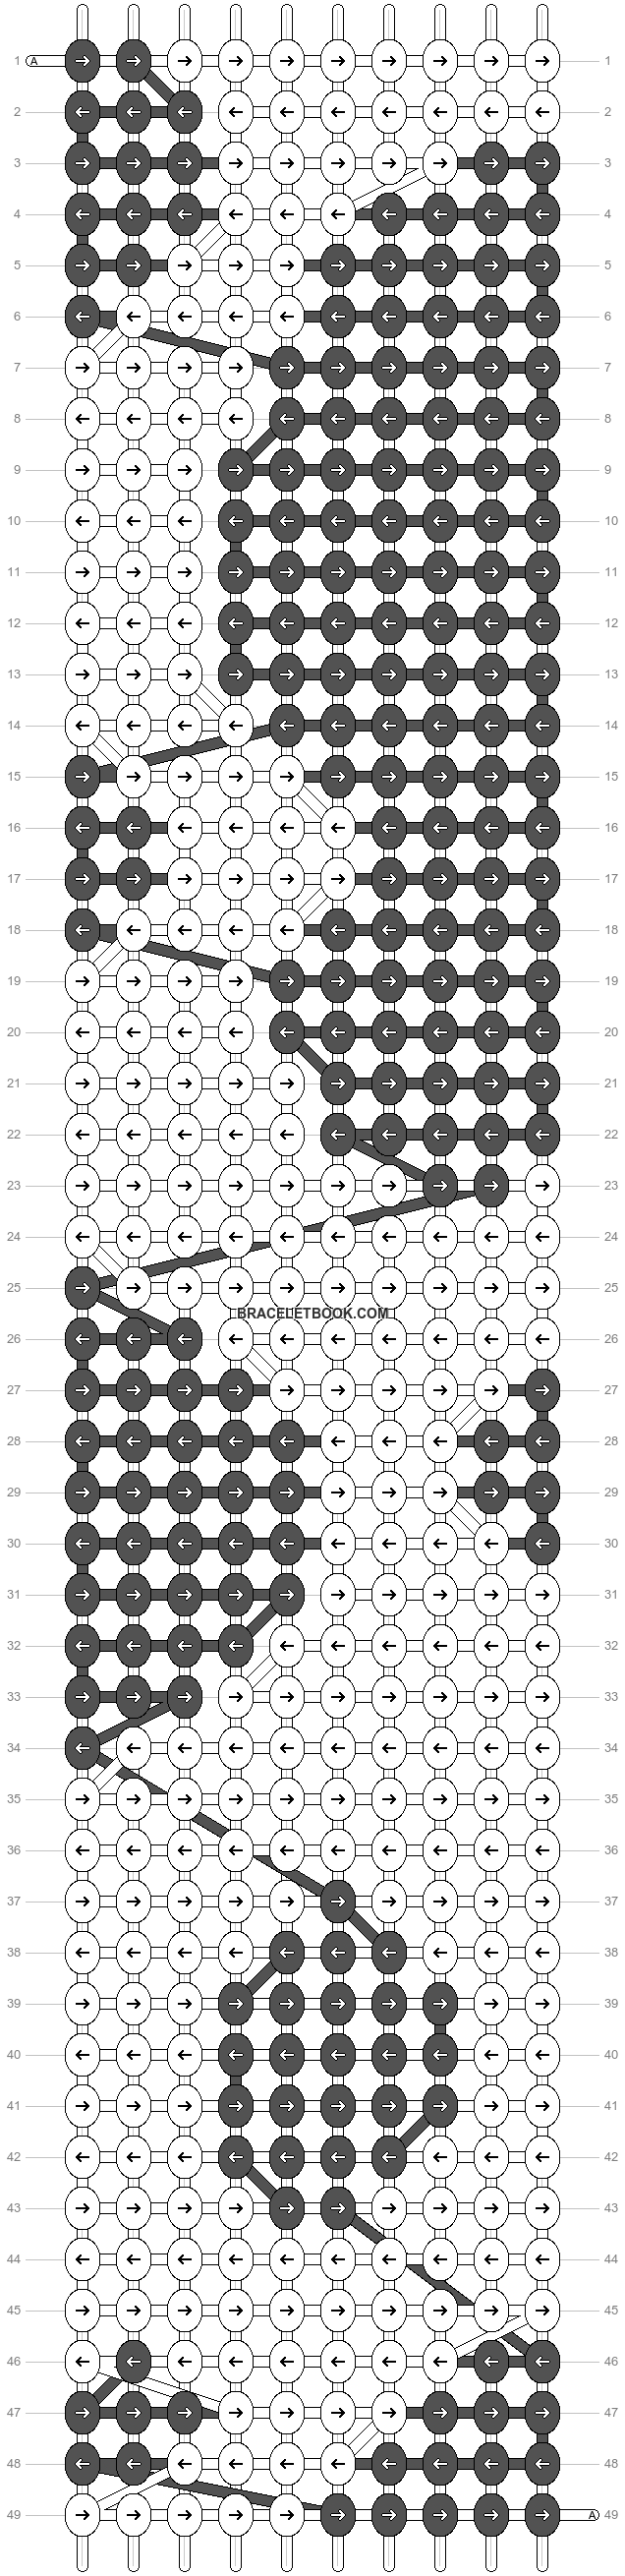 Alpha pattern #70381 variation #129762 pattern